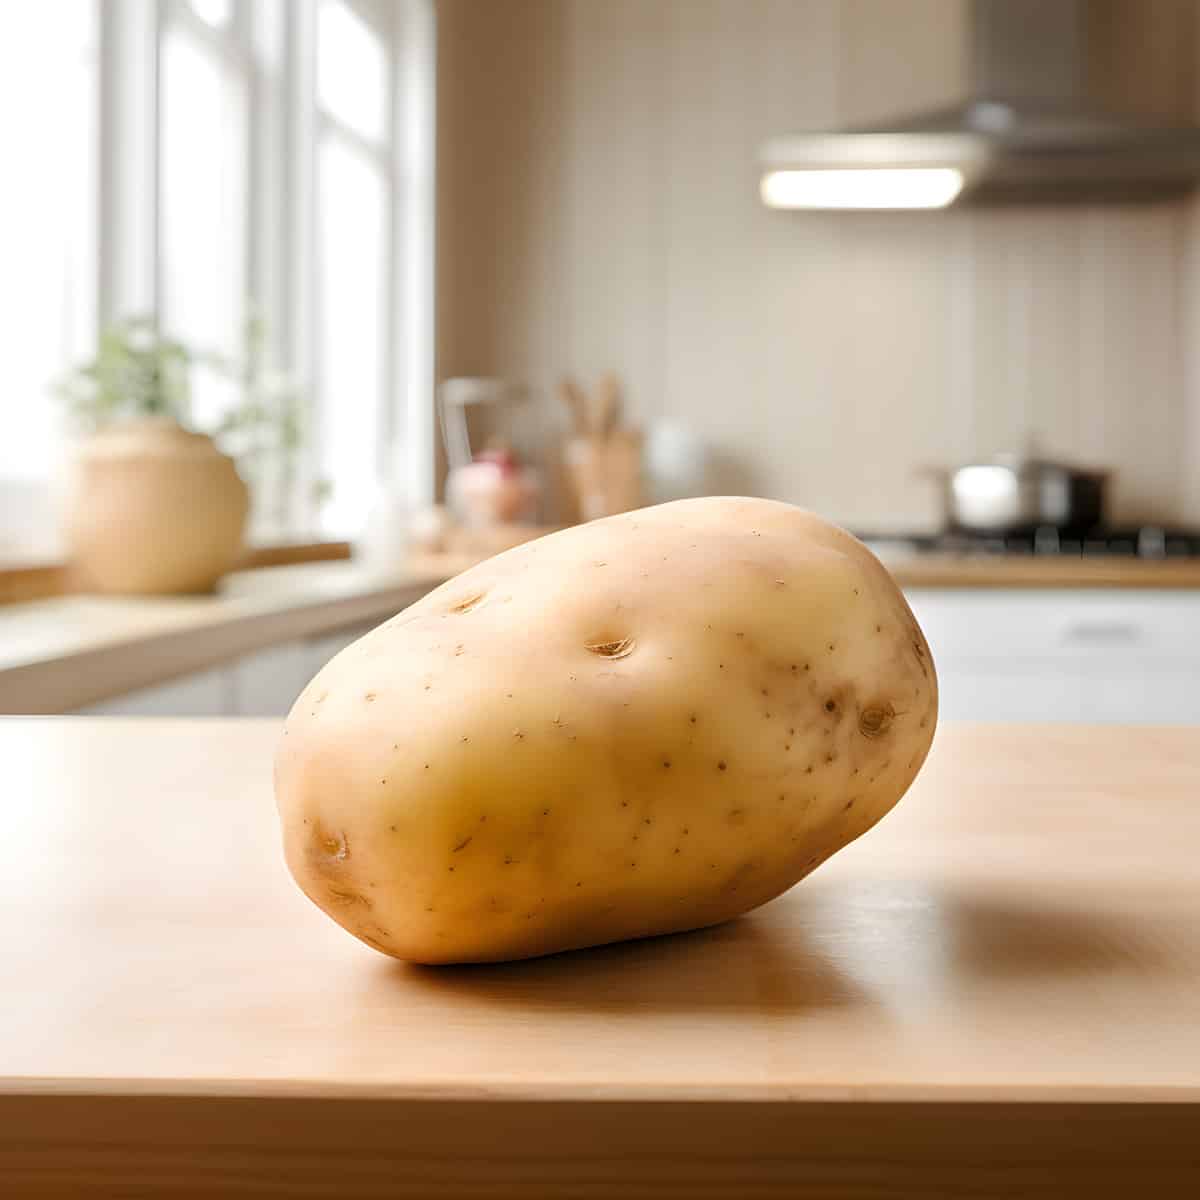 Filea Potatoes on a kitchen counter